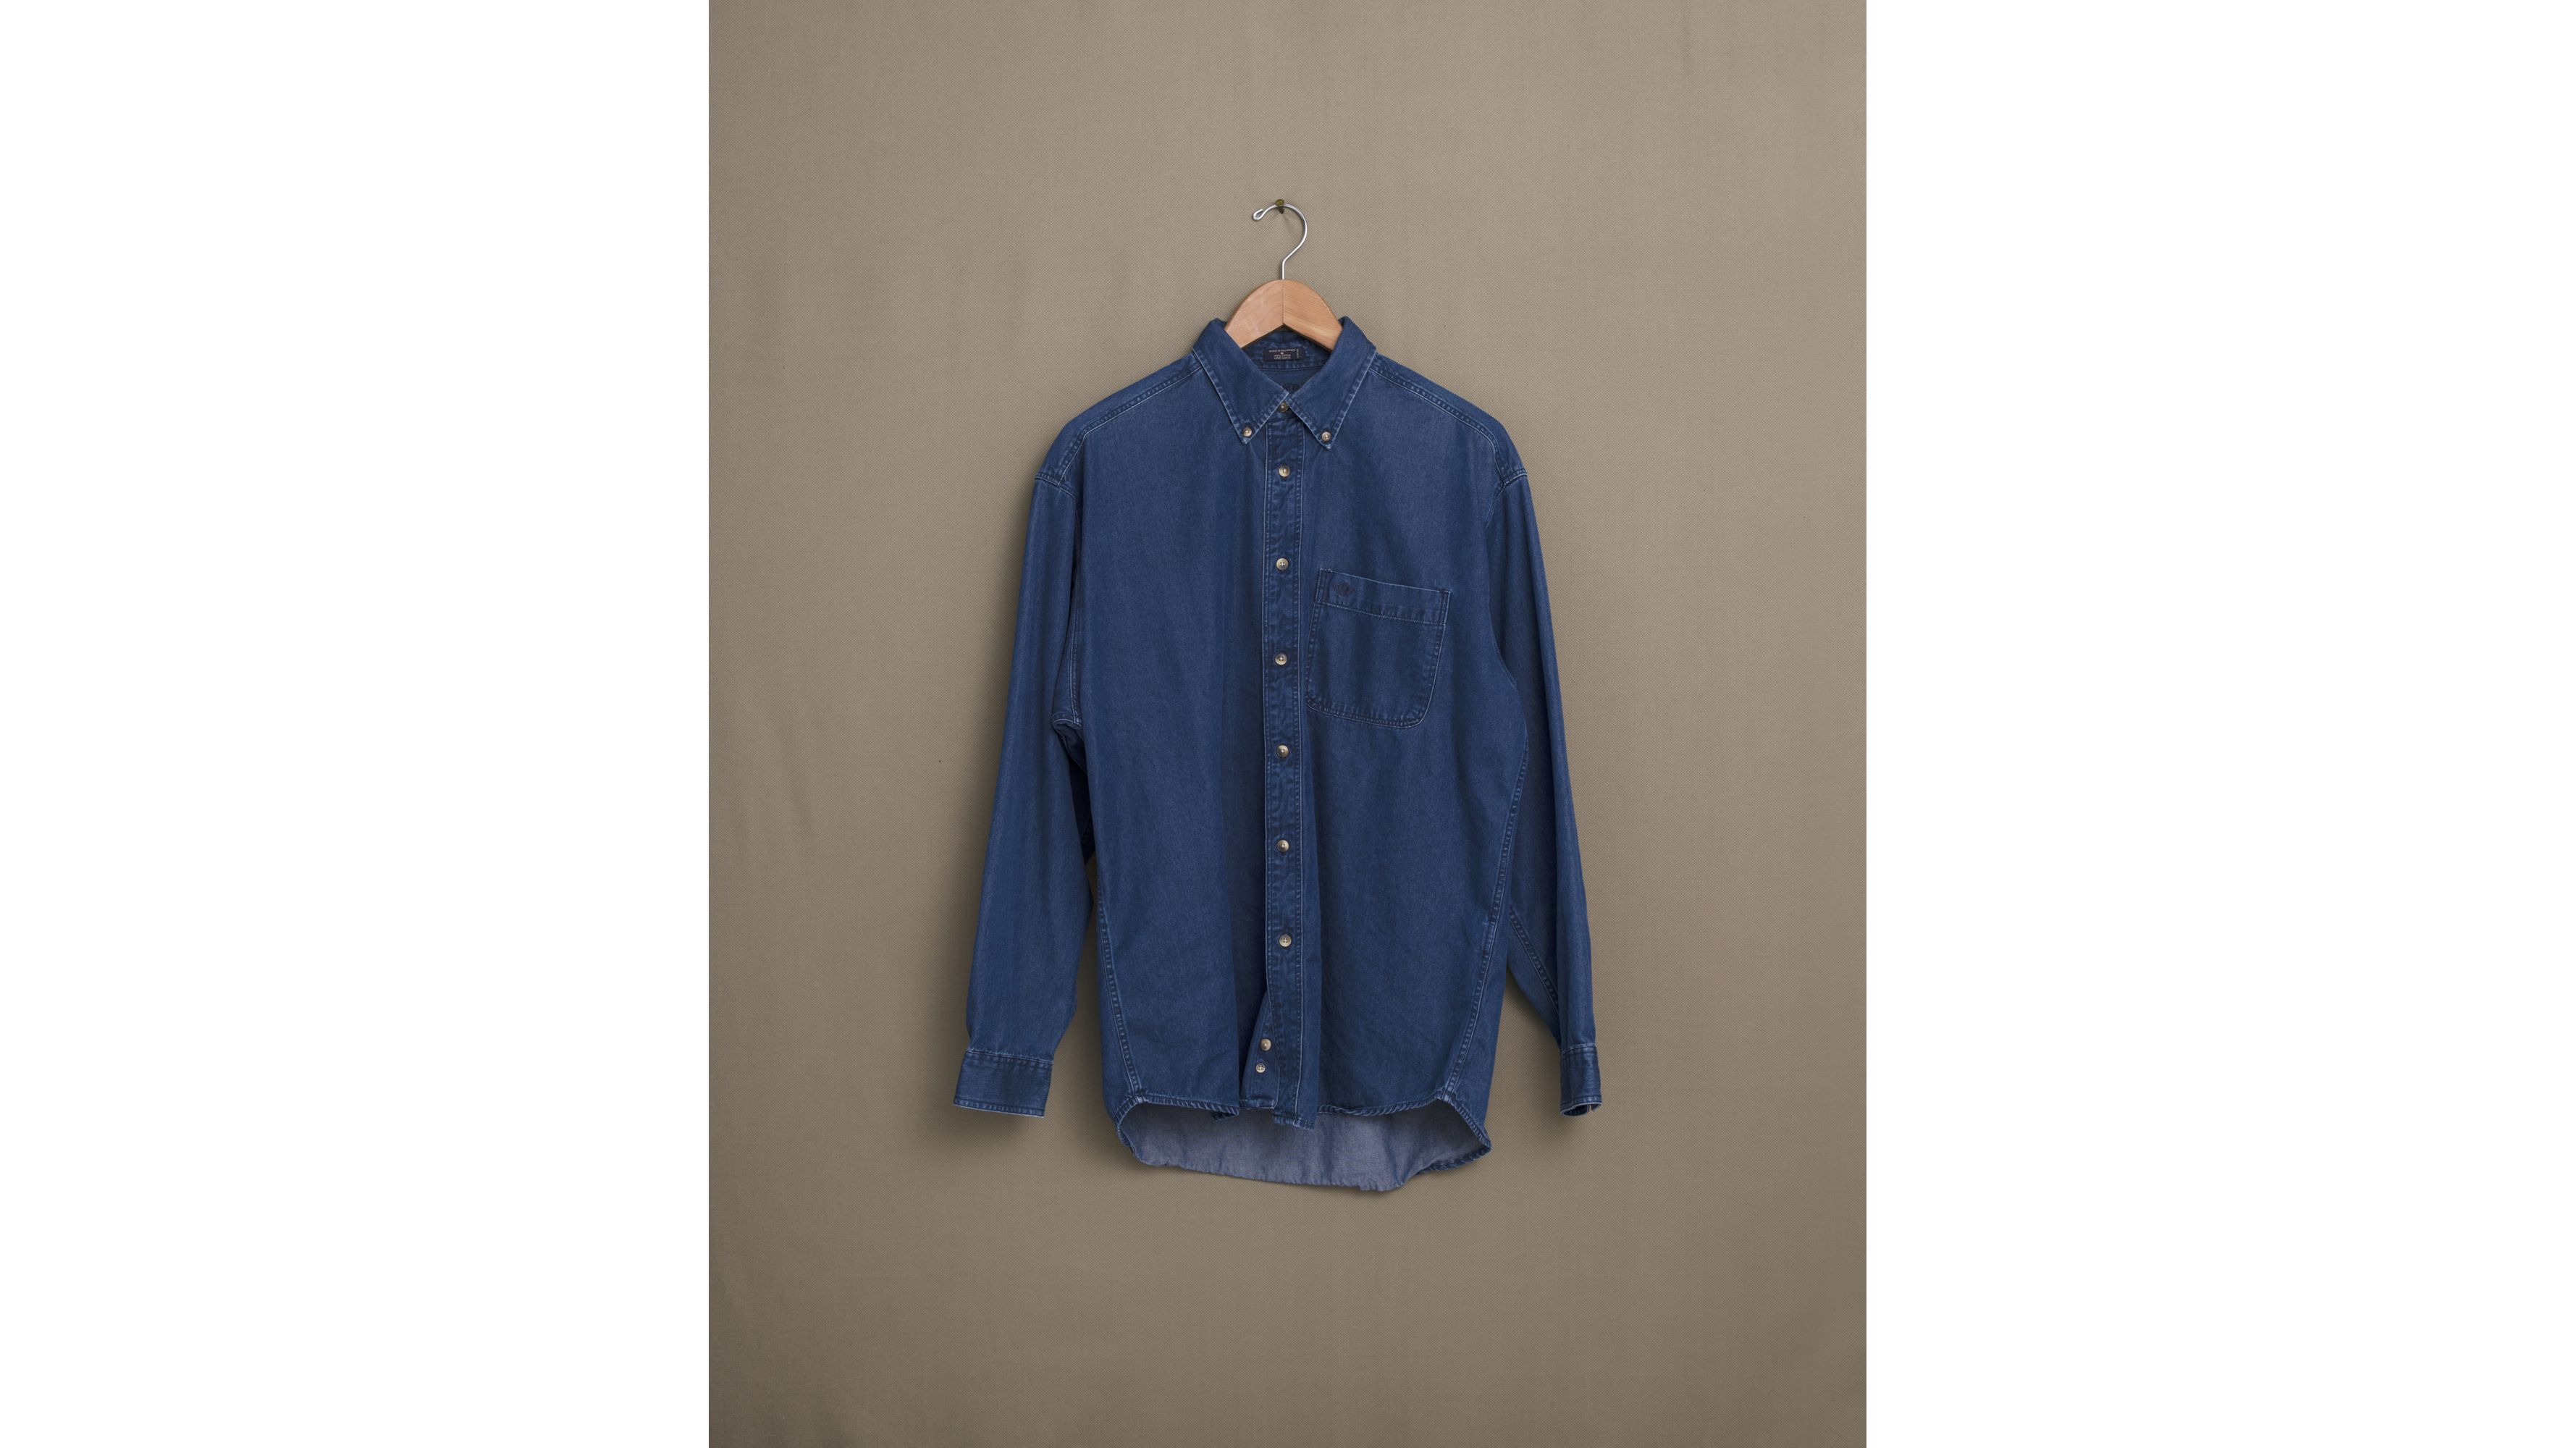 Barstow Western Denim Shirt - Medium Wash | Levi's® US